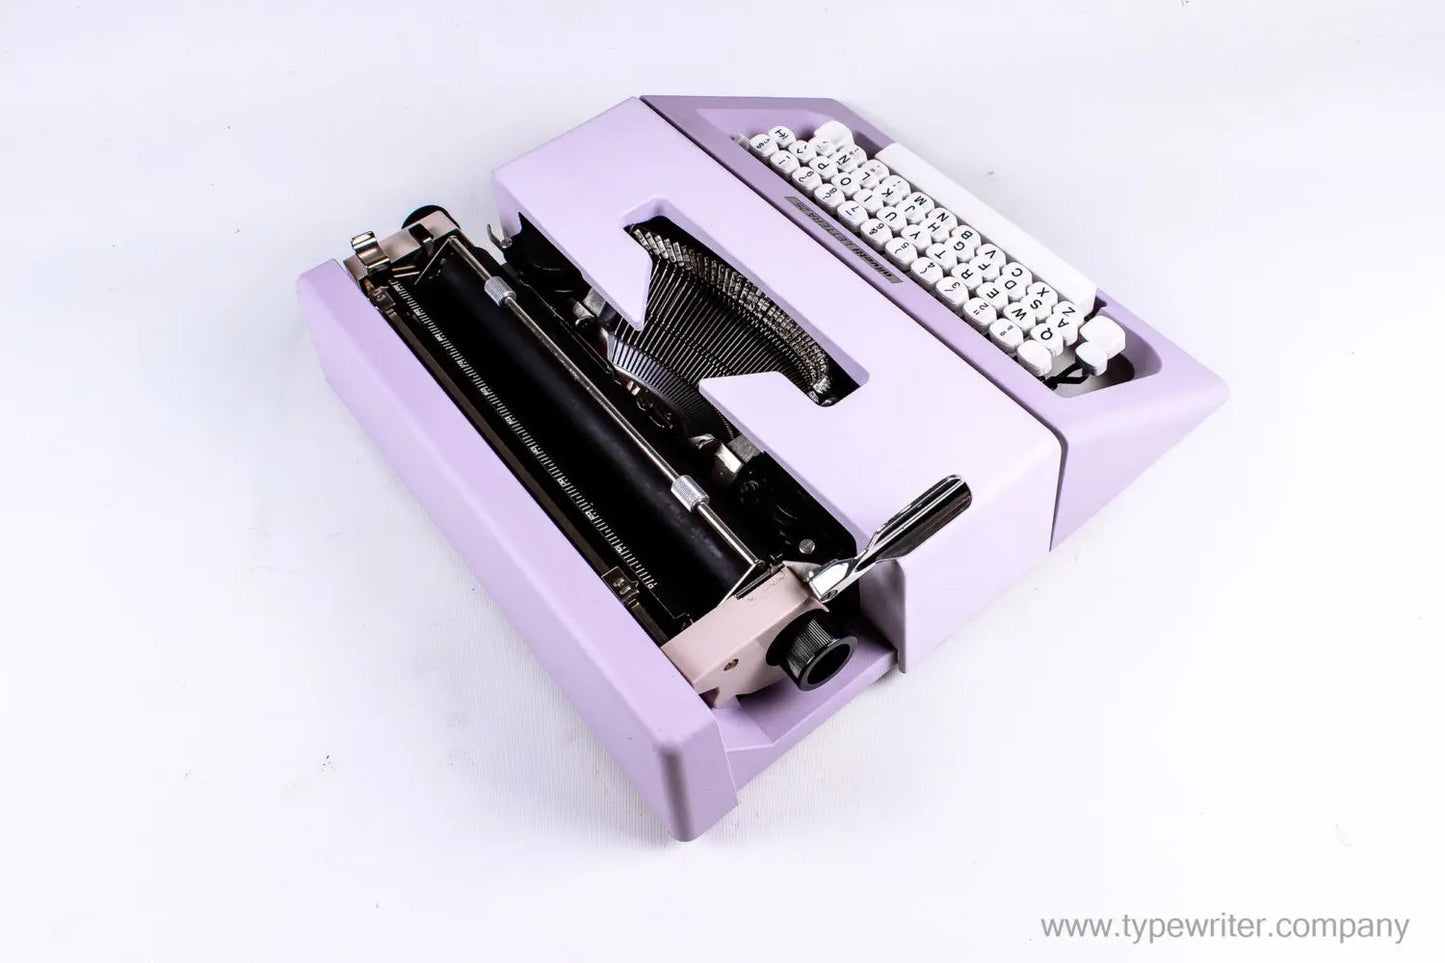 Olivetti Lettera 25 Lilac Manual Typewriter, Professionally Serviced - ElGranero Typewriter.Company